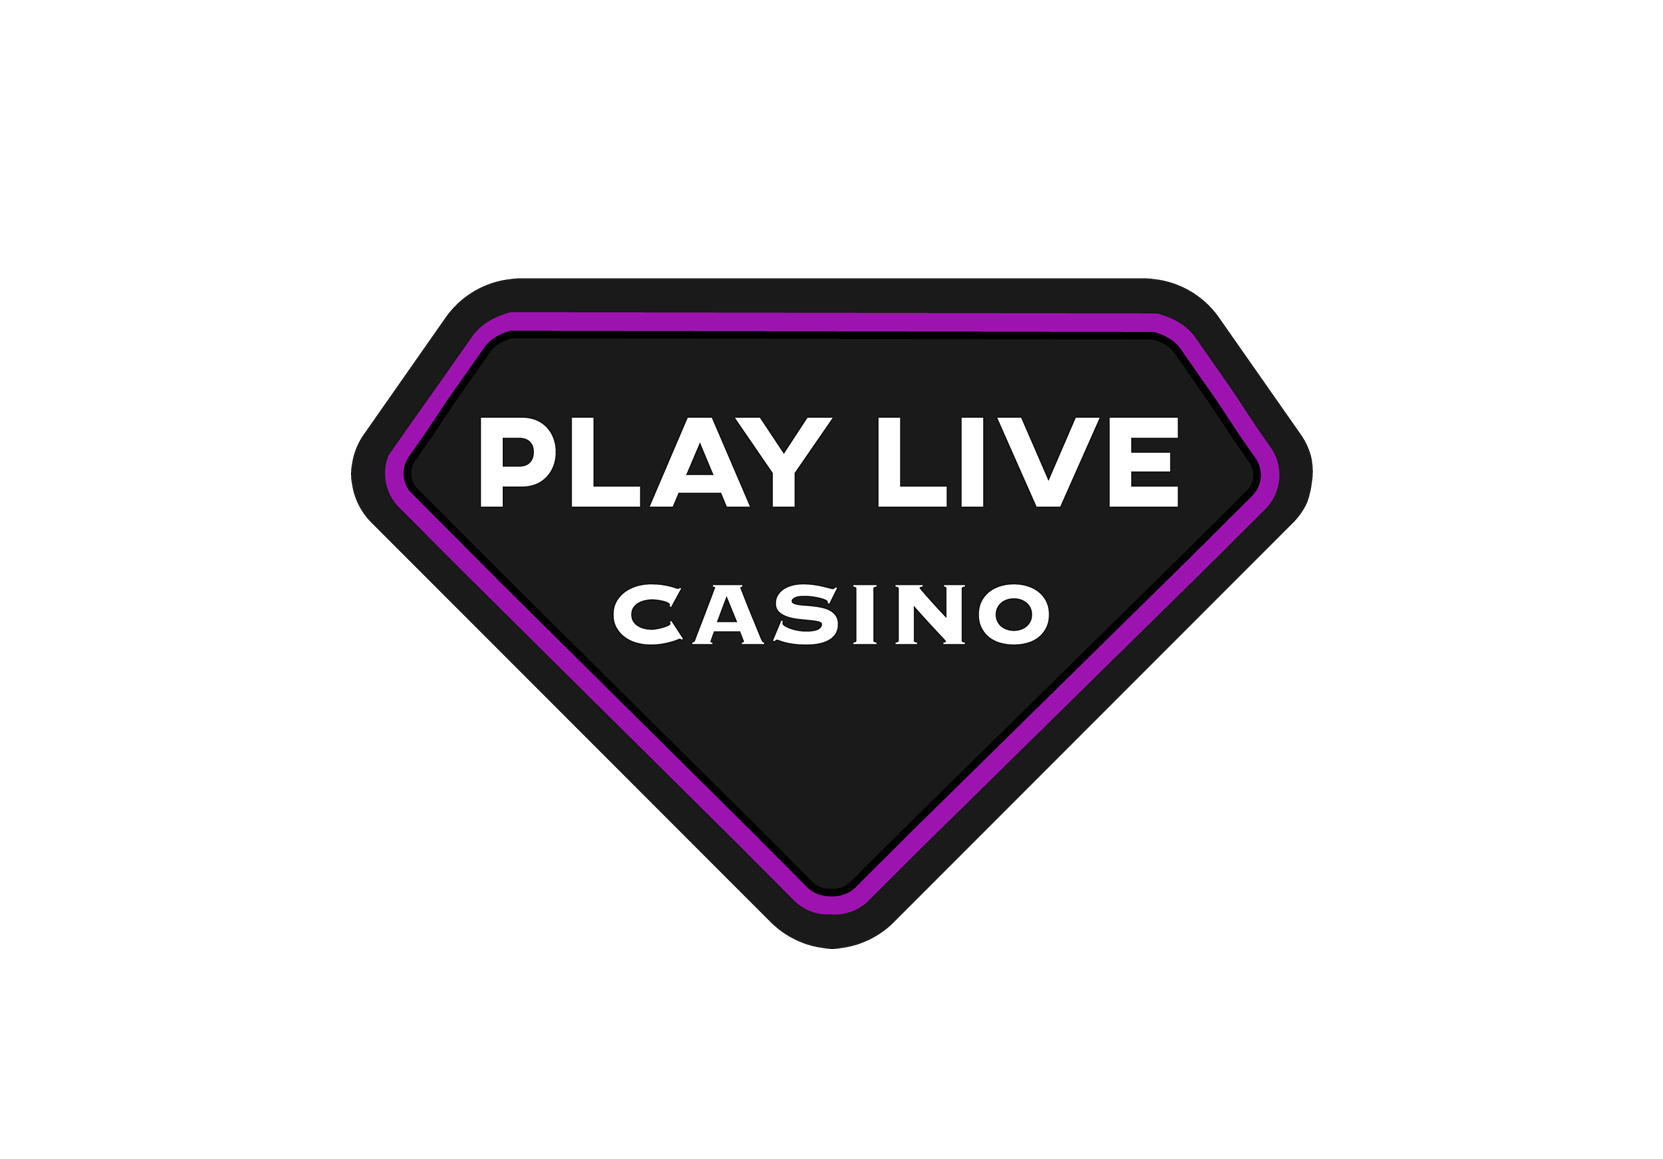 Play Live Casino